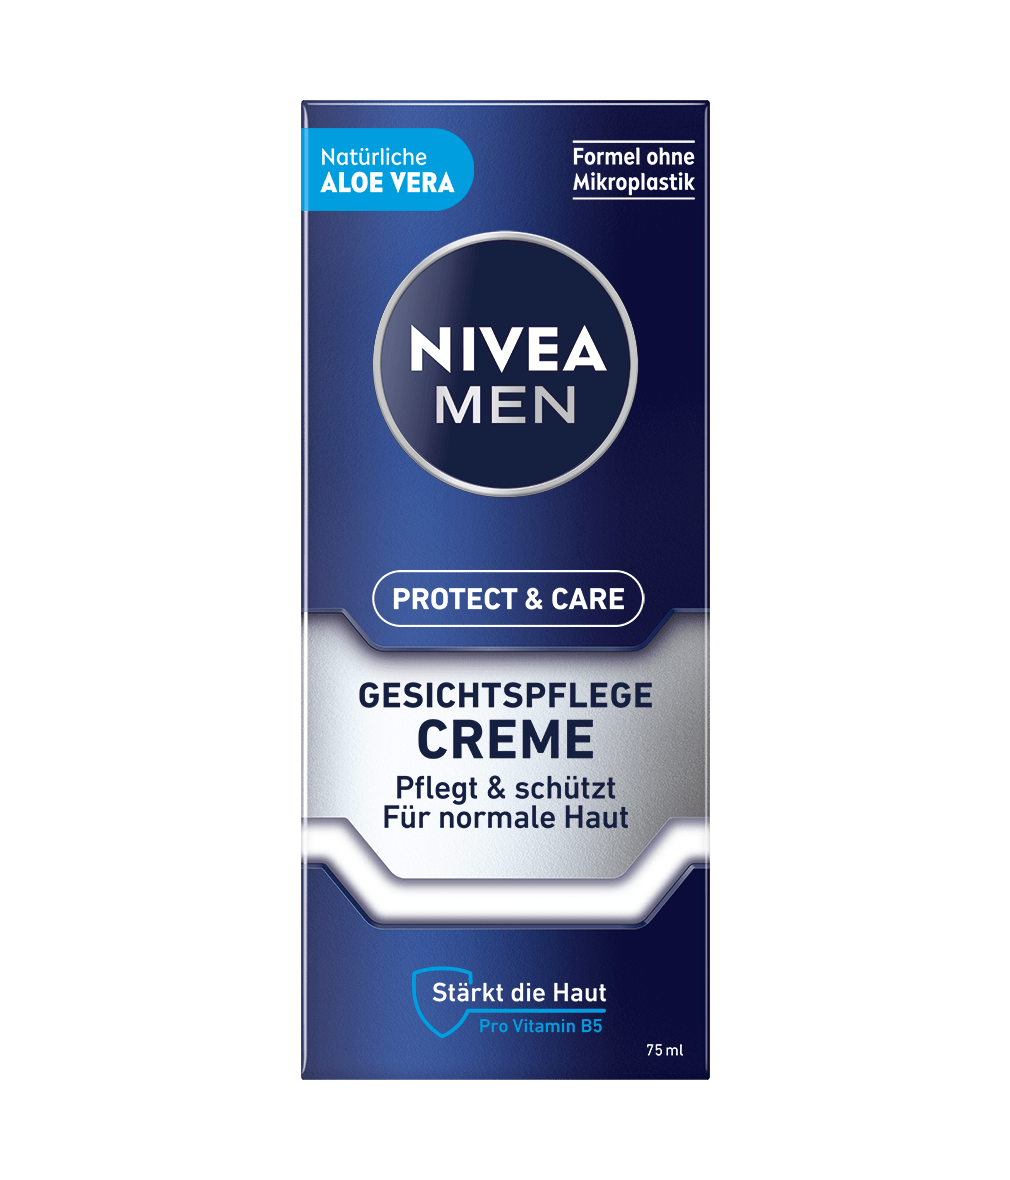 NIVEA MEN PROTECT & CARE	Gesichtspflege Creme_75ml